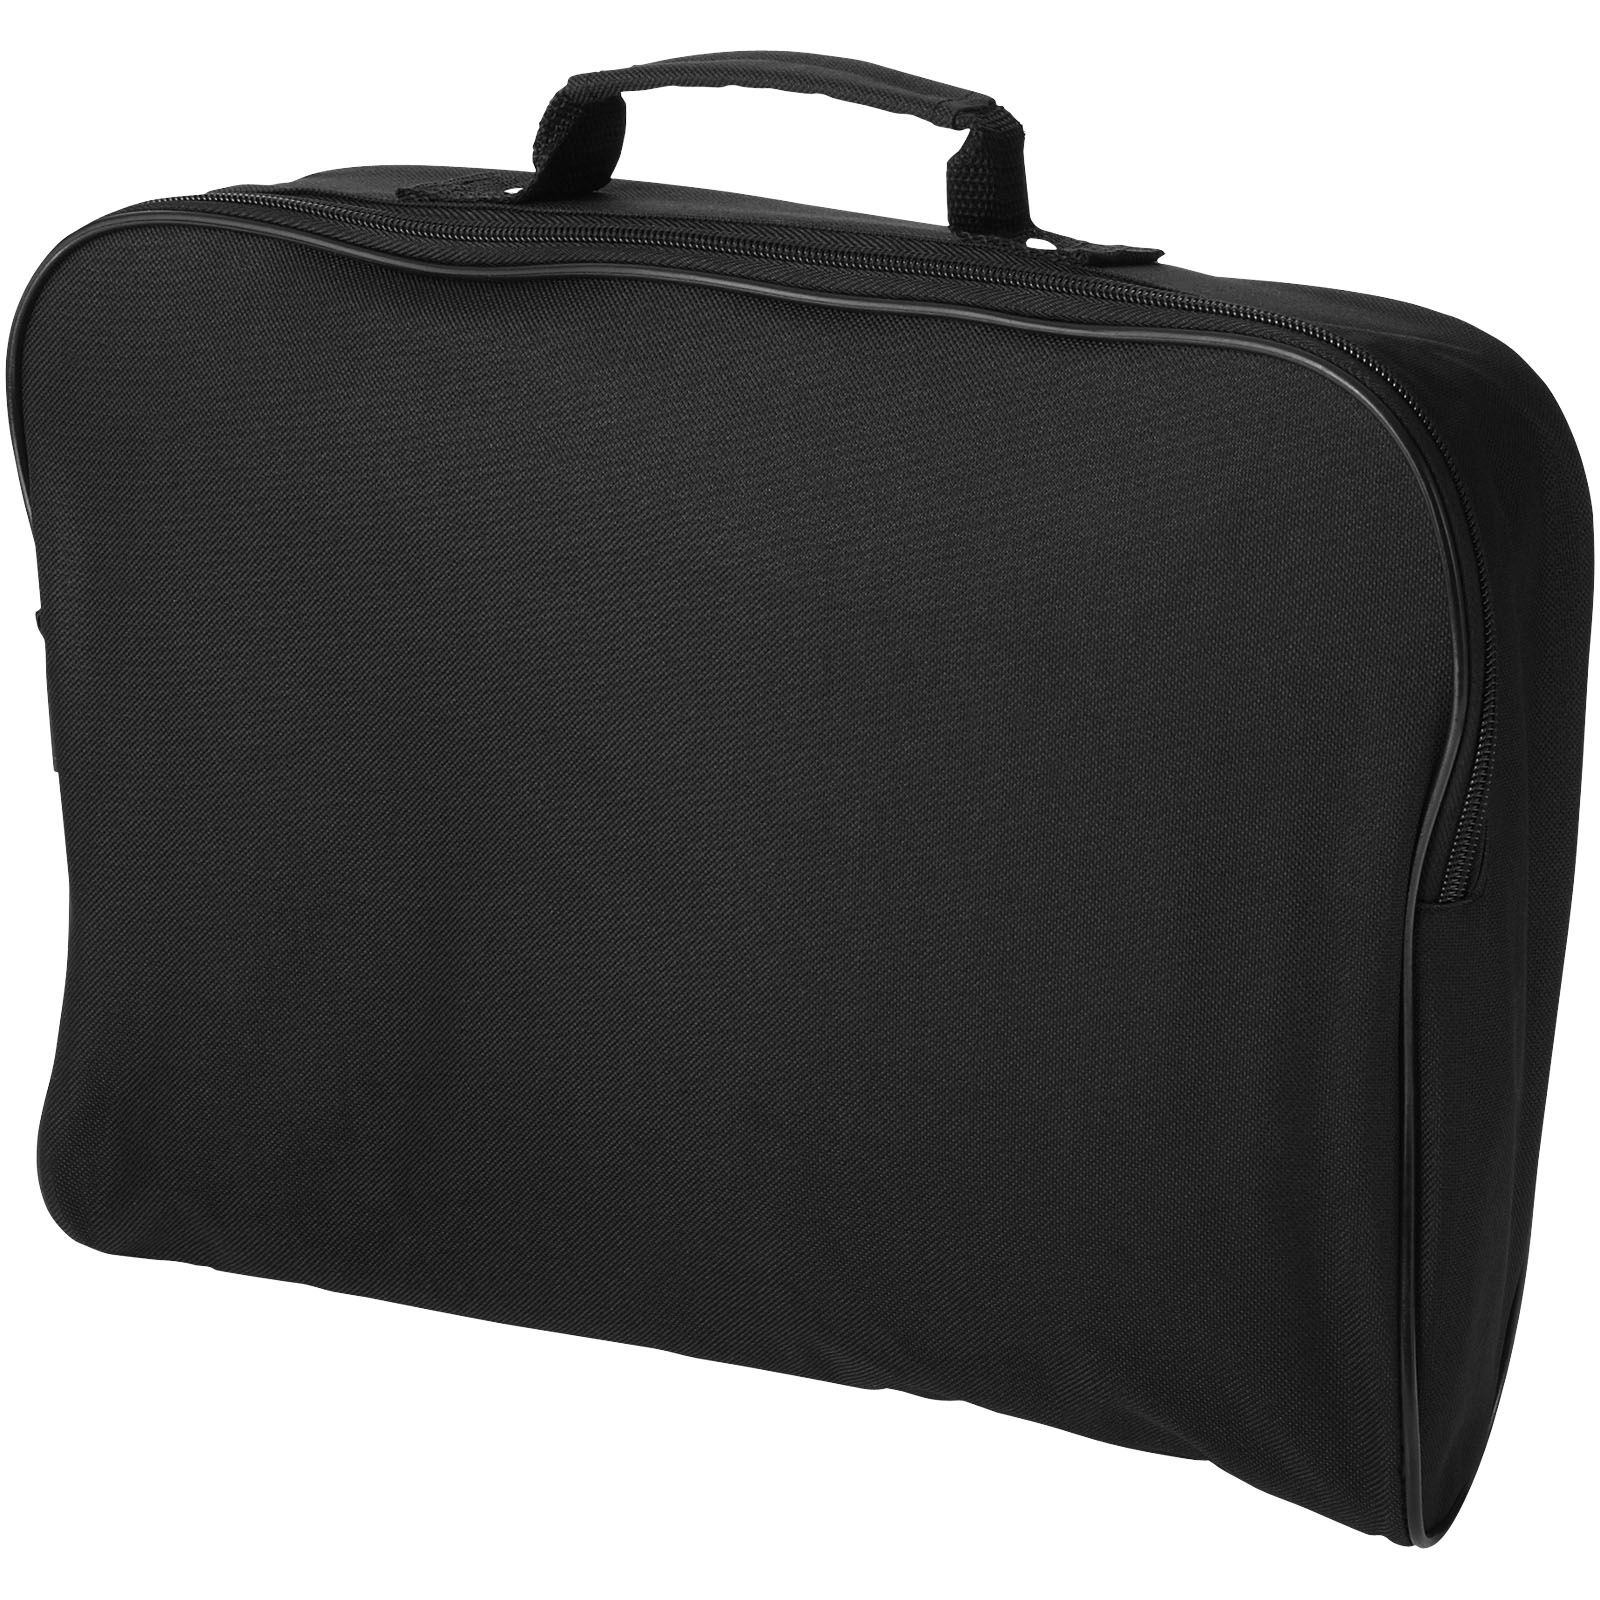 A document bag for seminars with a zipper - Carlton